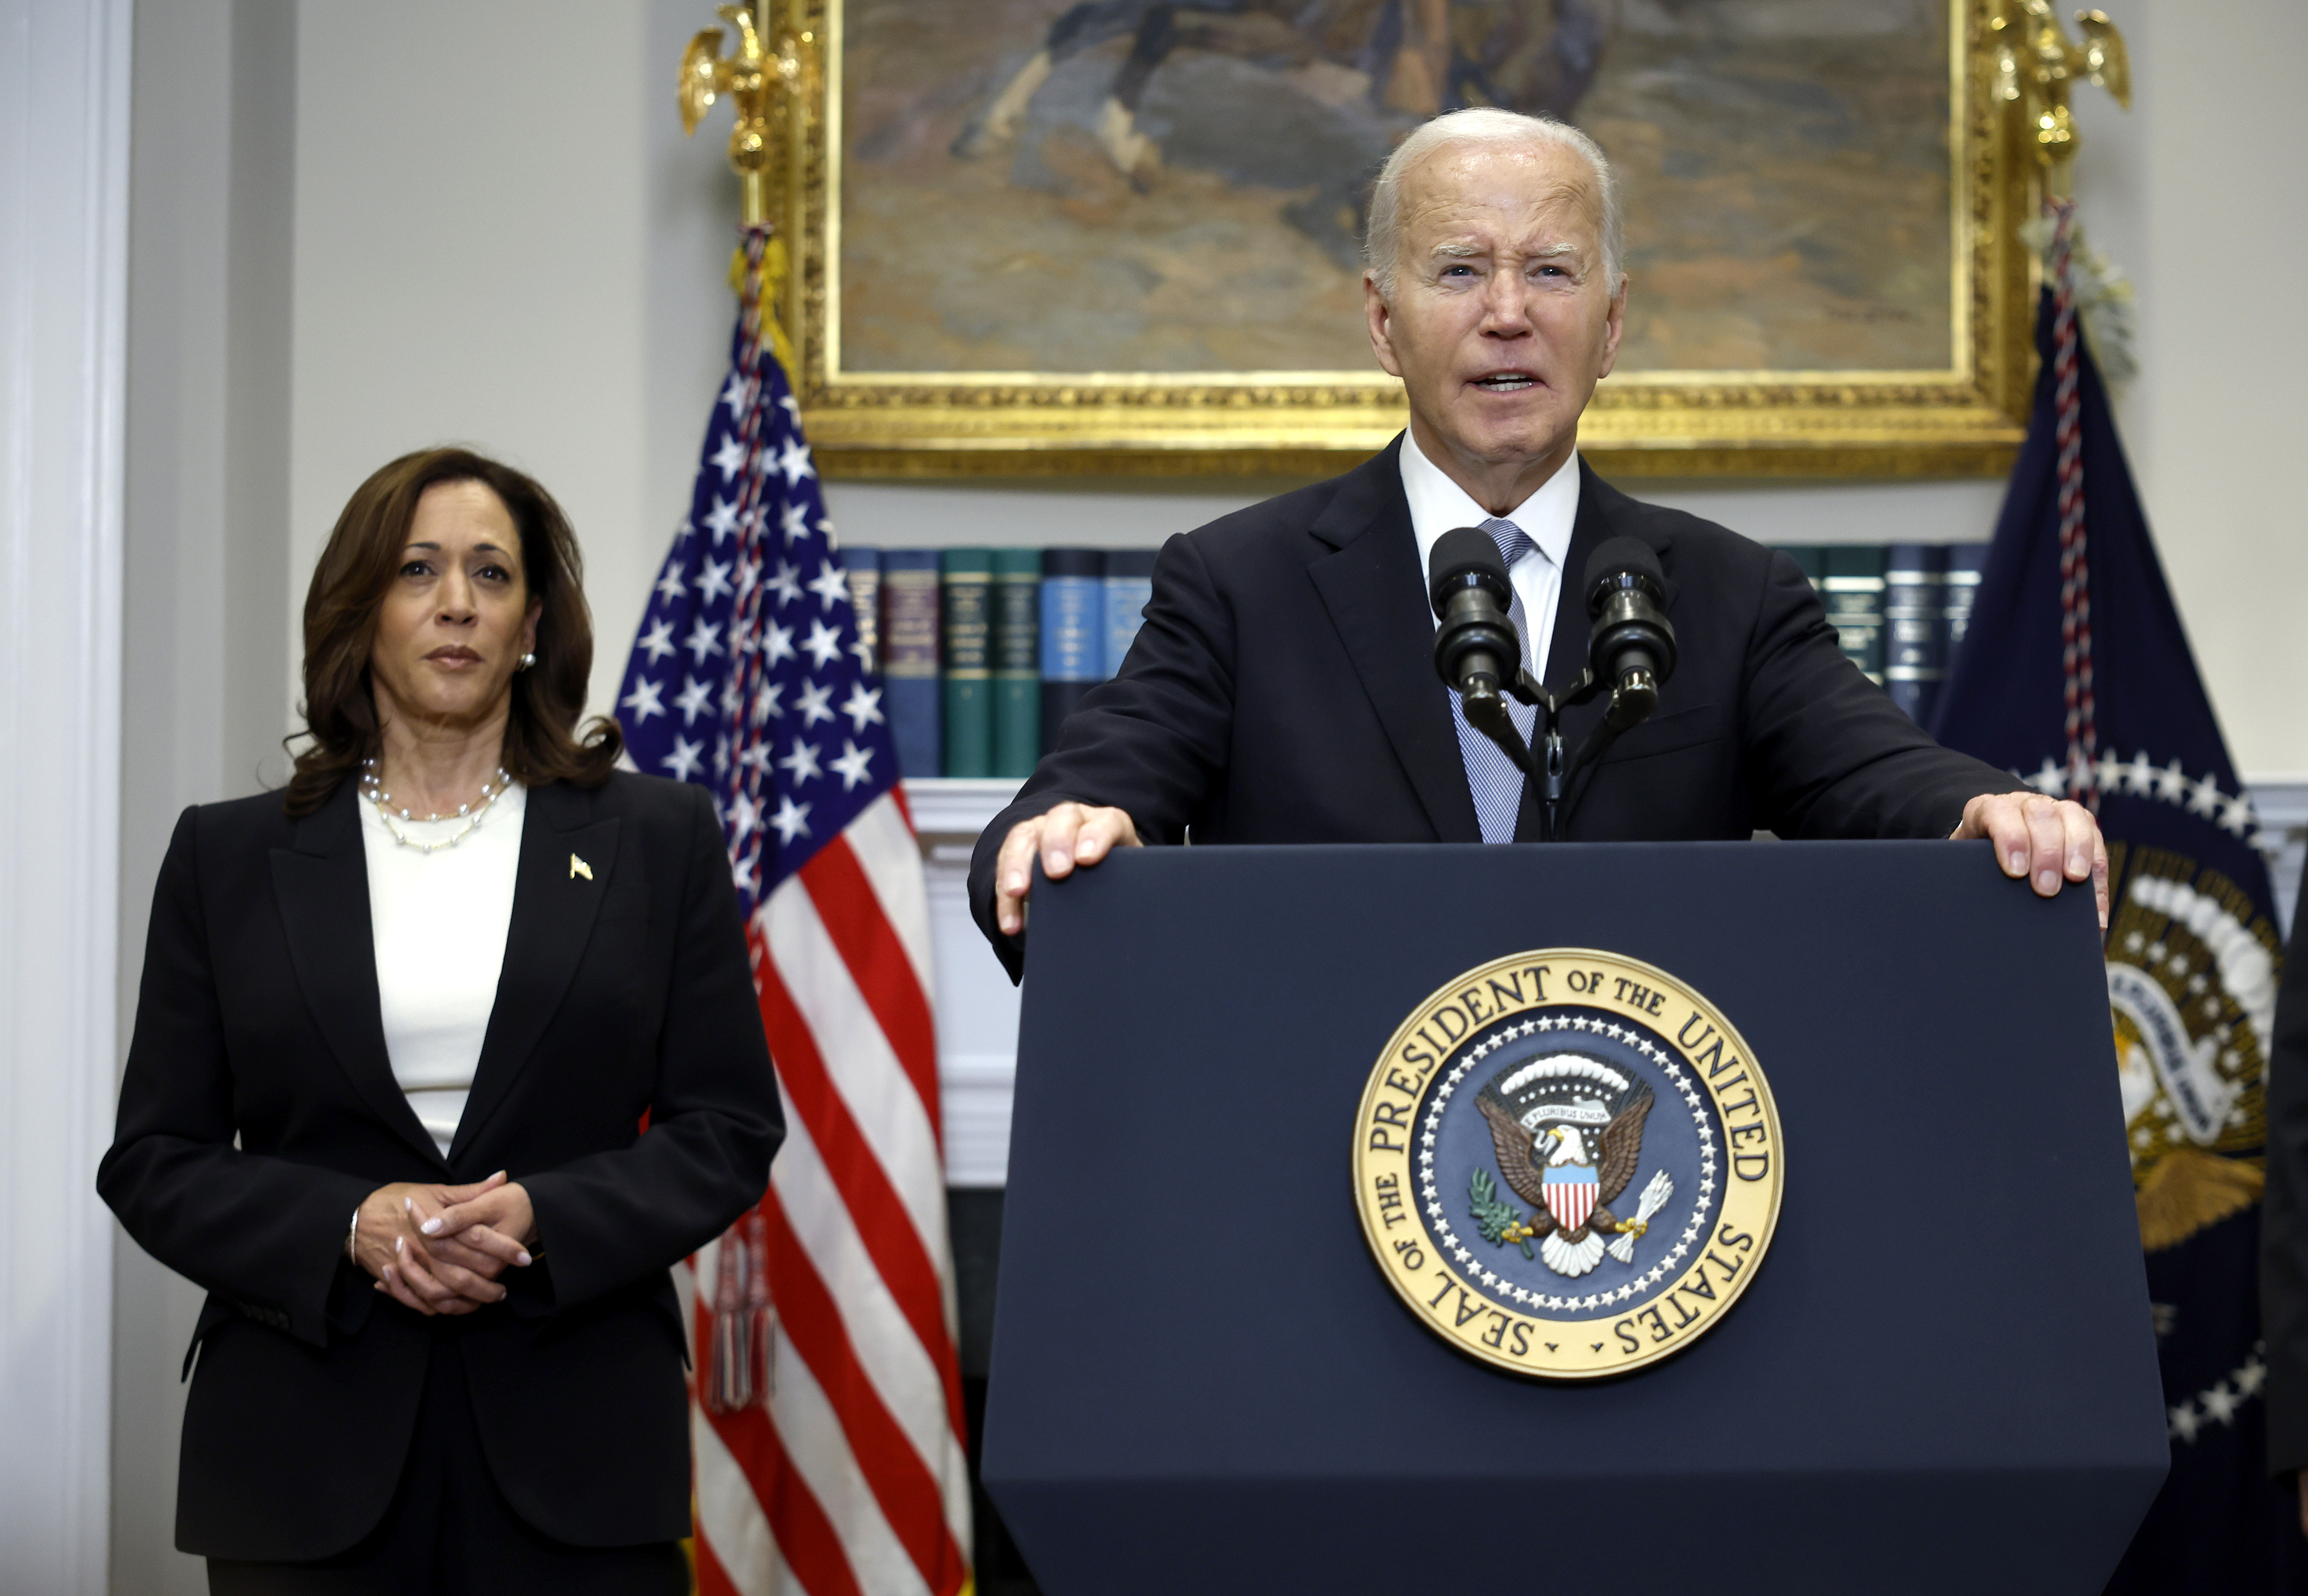 Biden Drops Out of Presidential Race, Endorses Harris